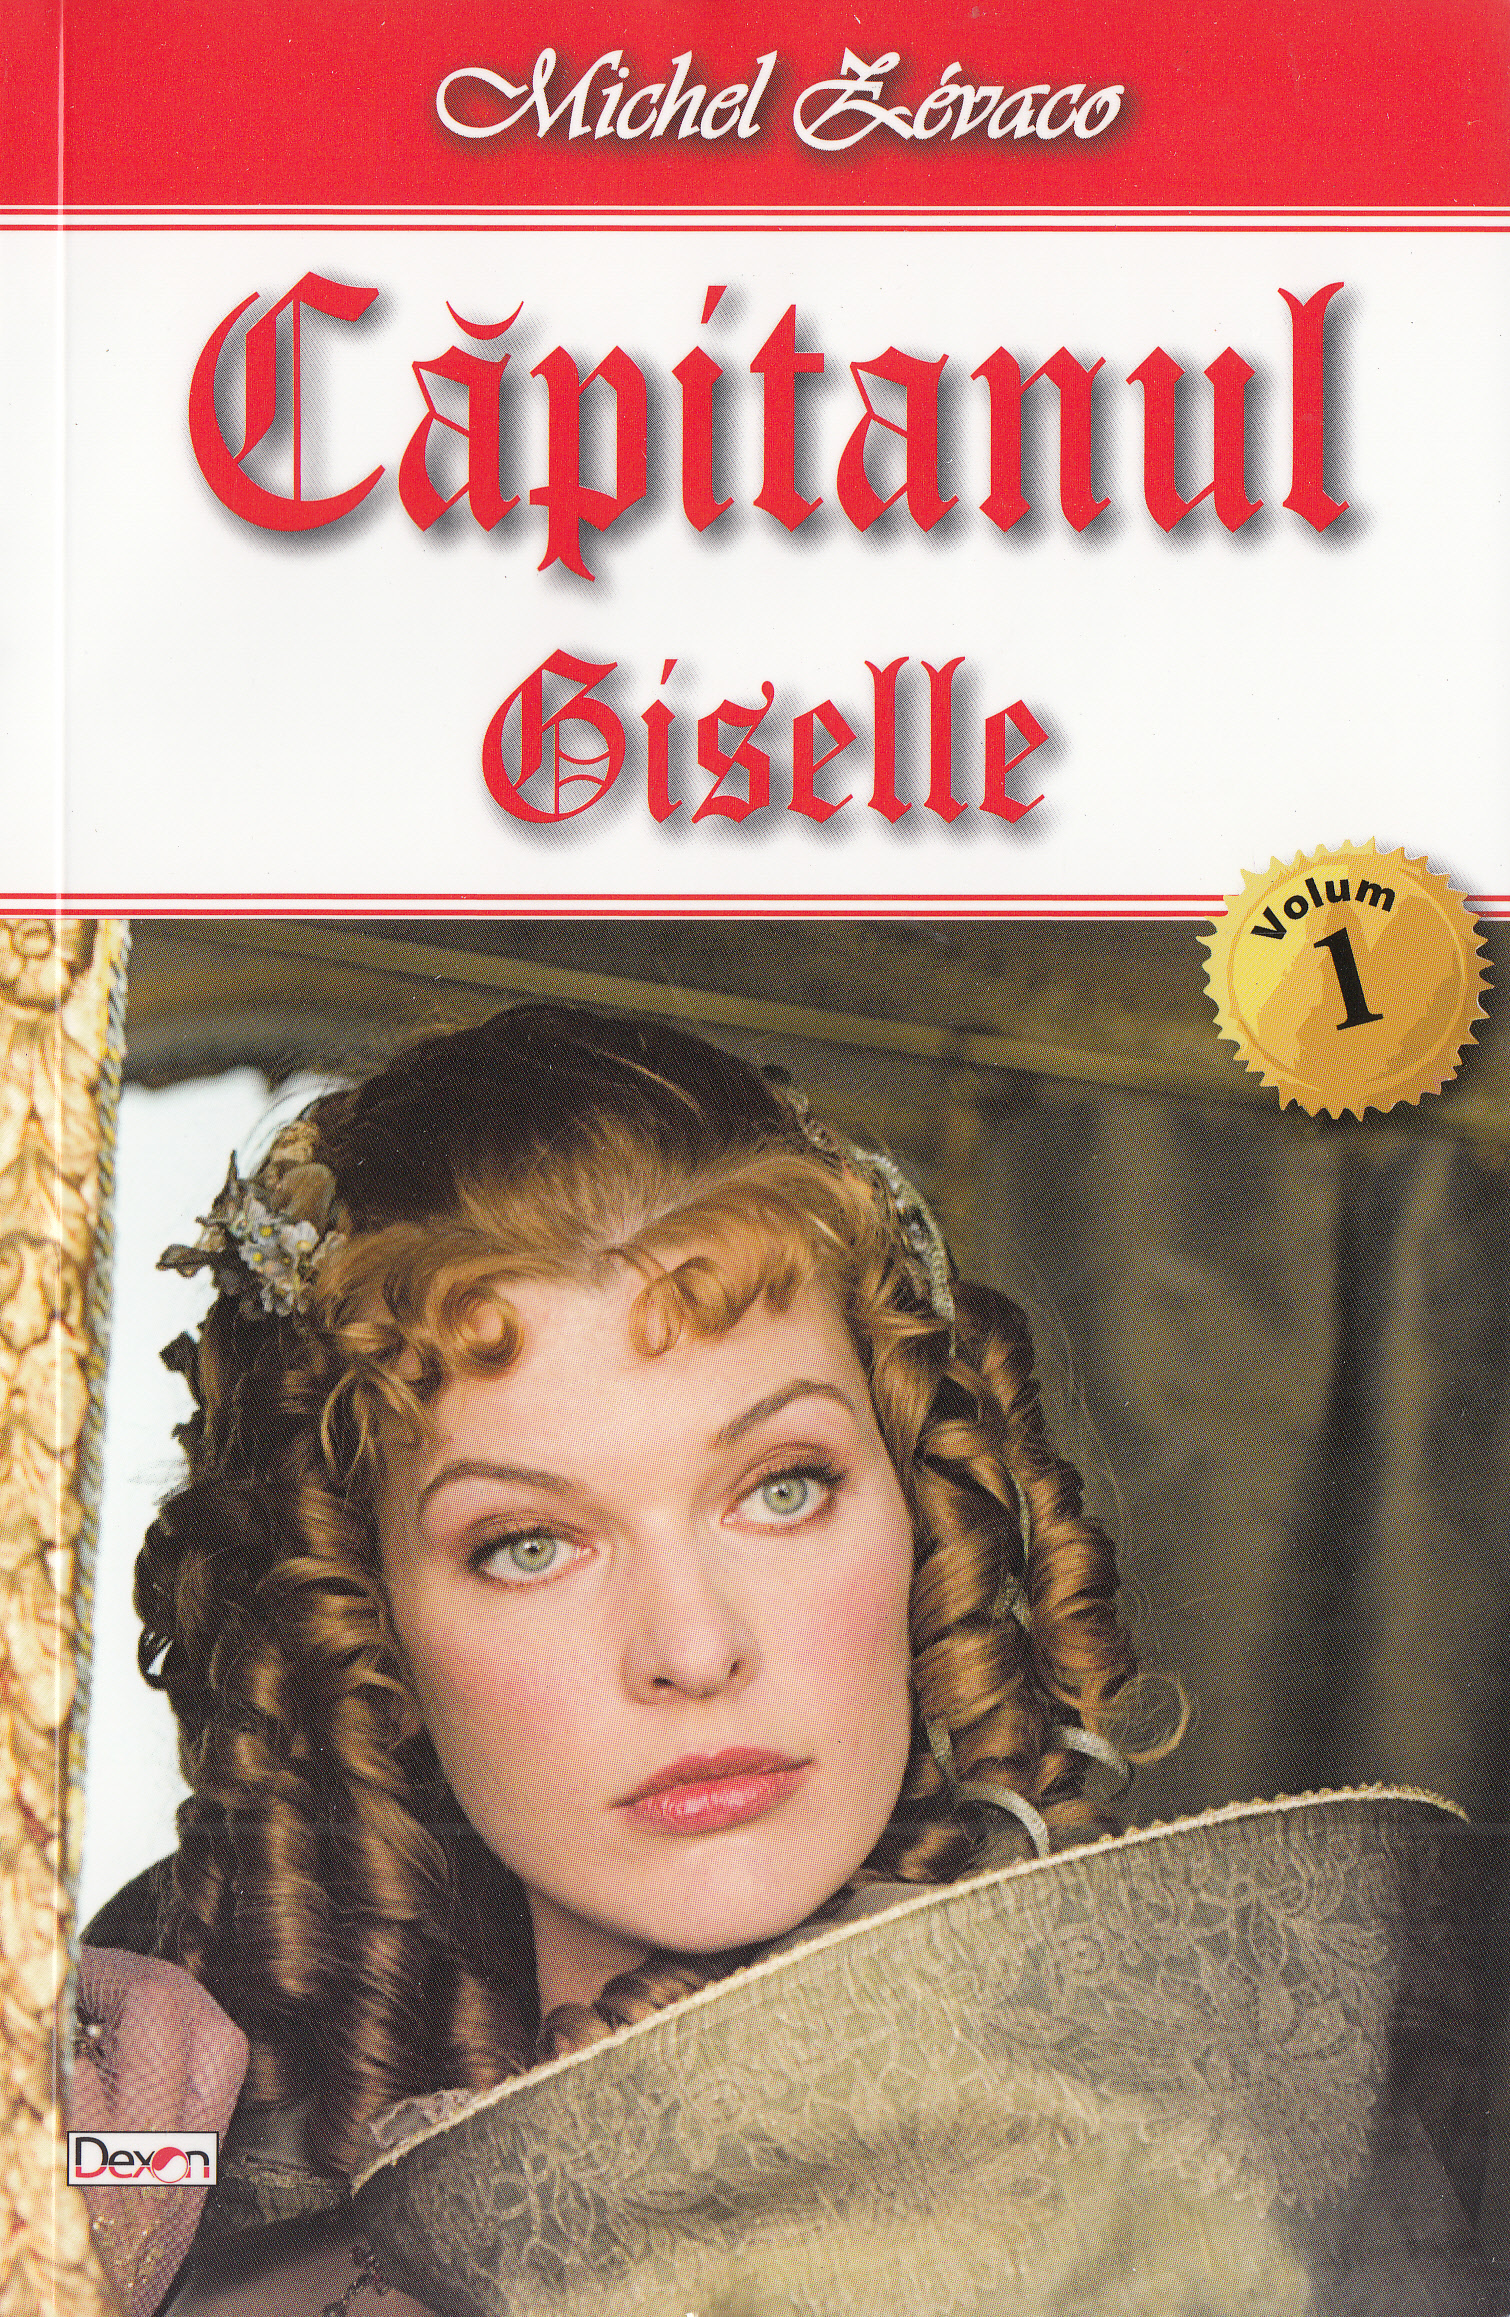 Capitanul Vol. 1: Giselle - Michel Zevaco